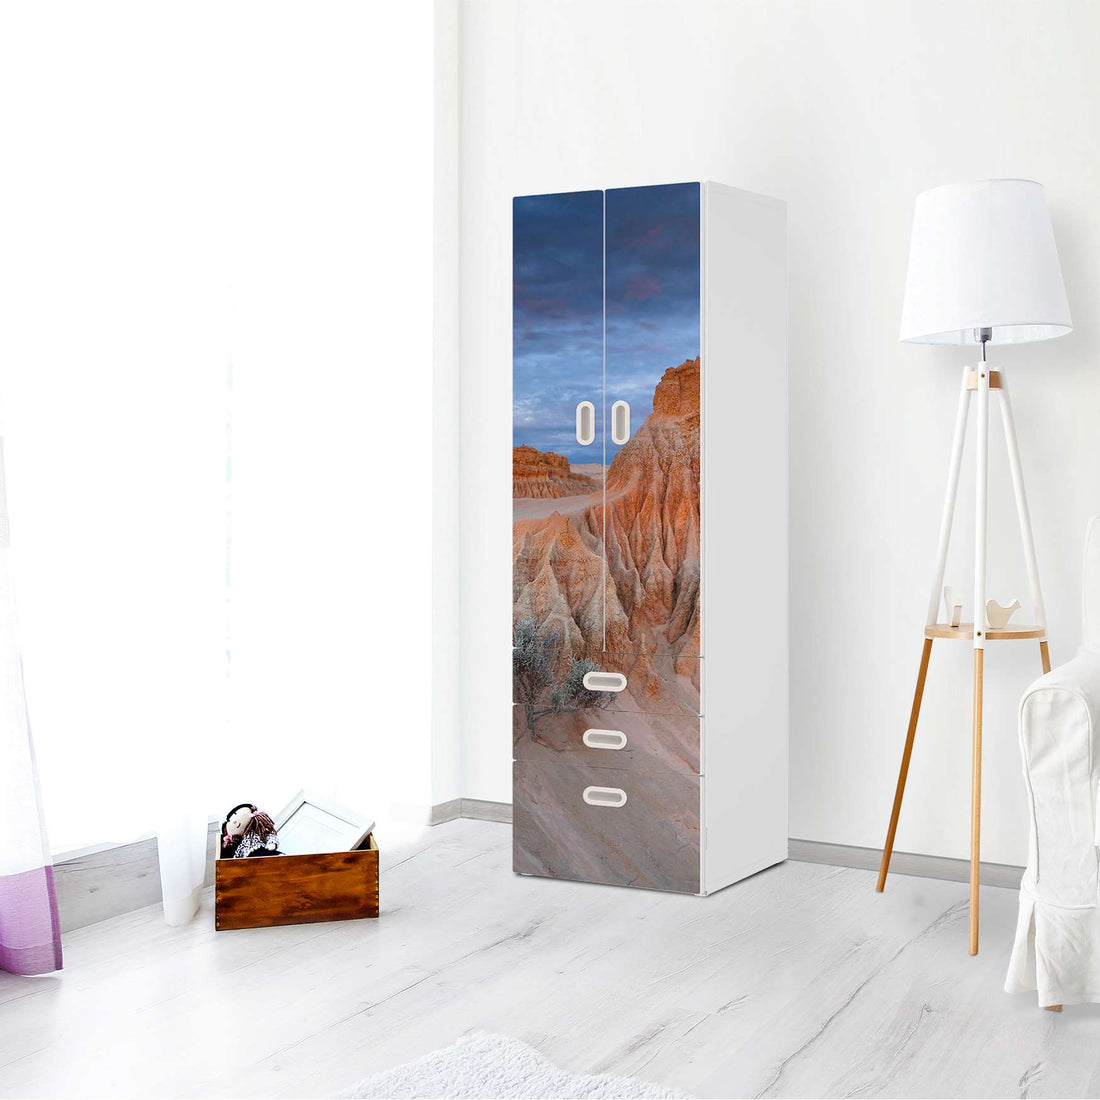 Klebefolie Outback Australia - IKEA Stuva / Fritids kombiniert - 3 Schubladen und 2 große Türen - Kinderzimmer